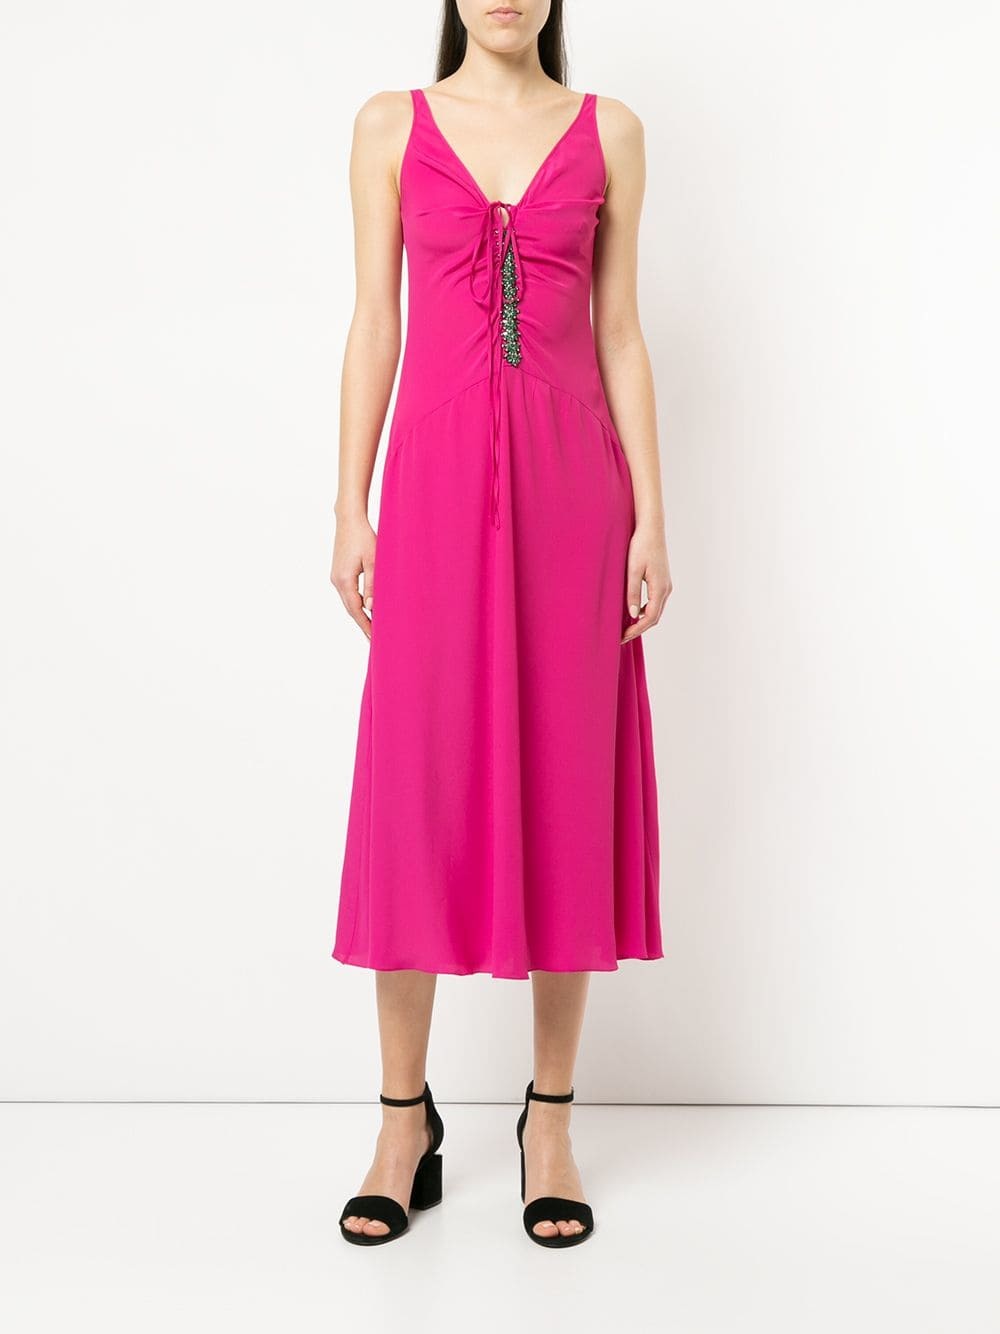 N°21 N21 Jewel Embellished Drop Waist Dress, $441 | farfetch.com ...